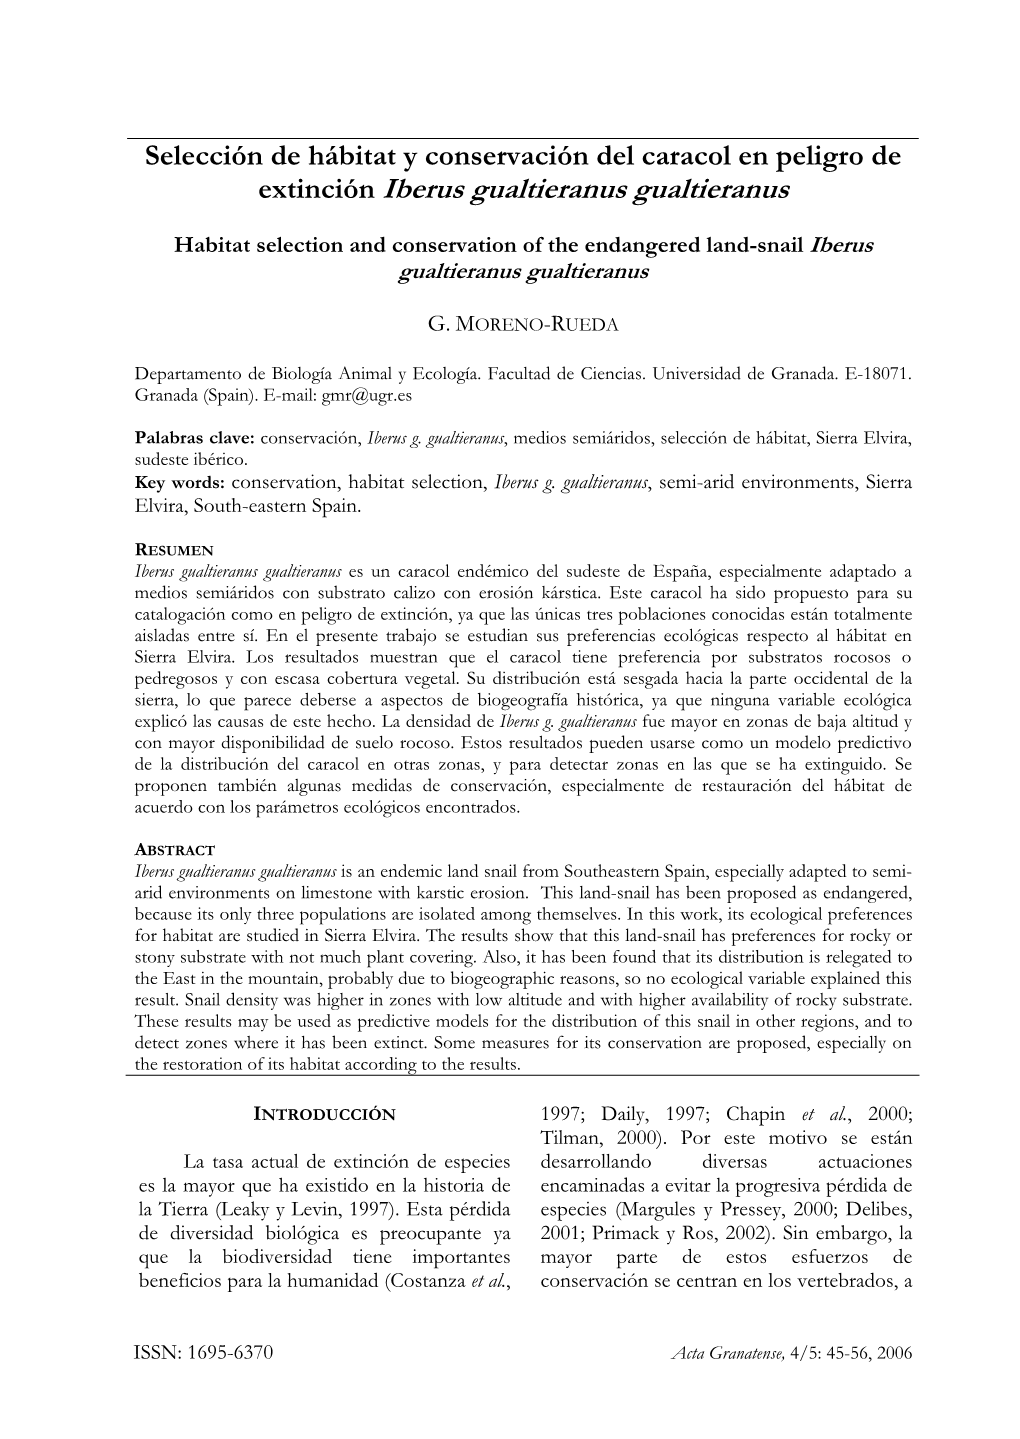 Habitat Selection and Conservation of the Endangered Land-Snail Iberus Gualtieranus Gualtieranus